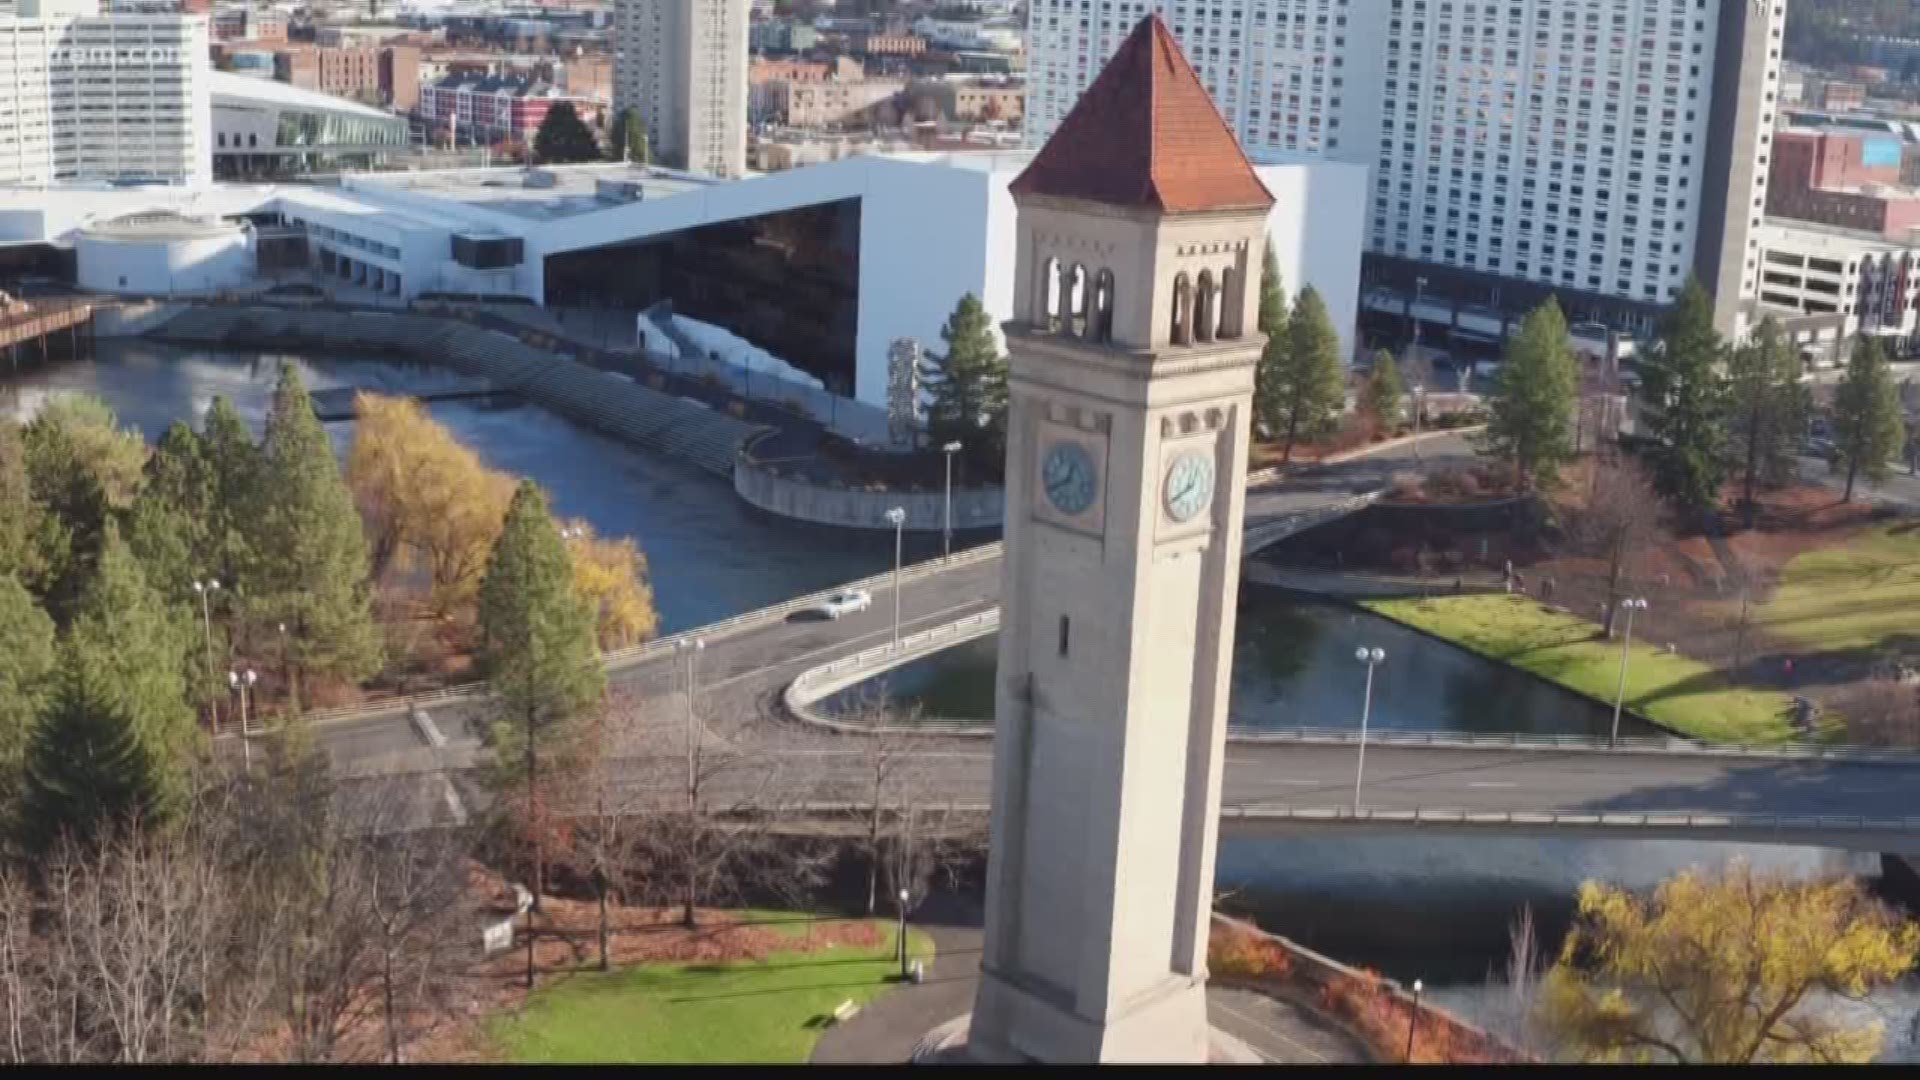 'I'm the clock winder': How one man keeps Spokane's clocktower on time